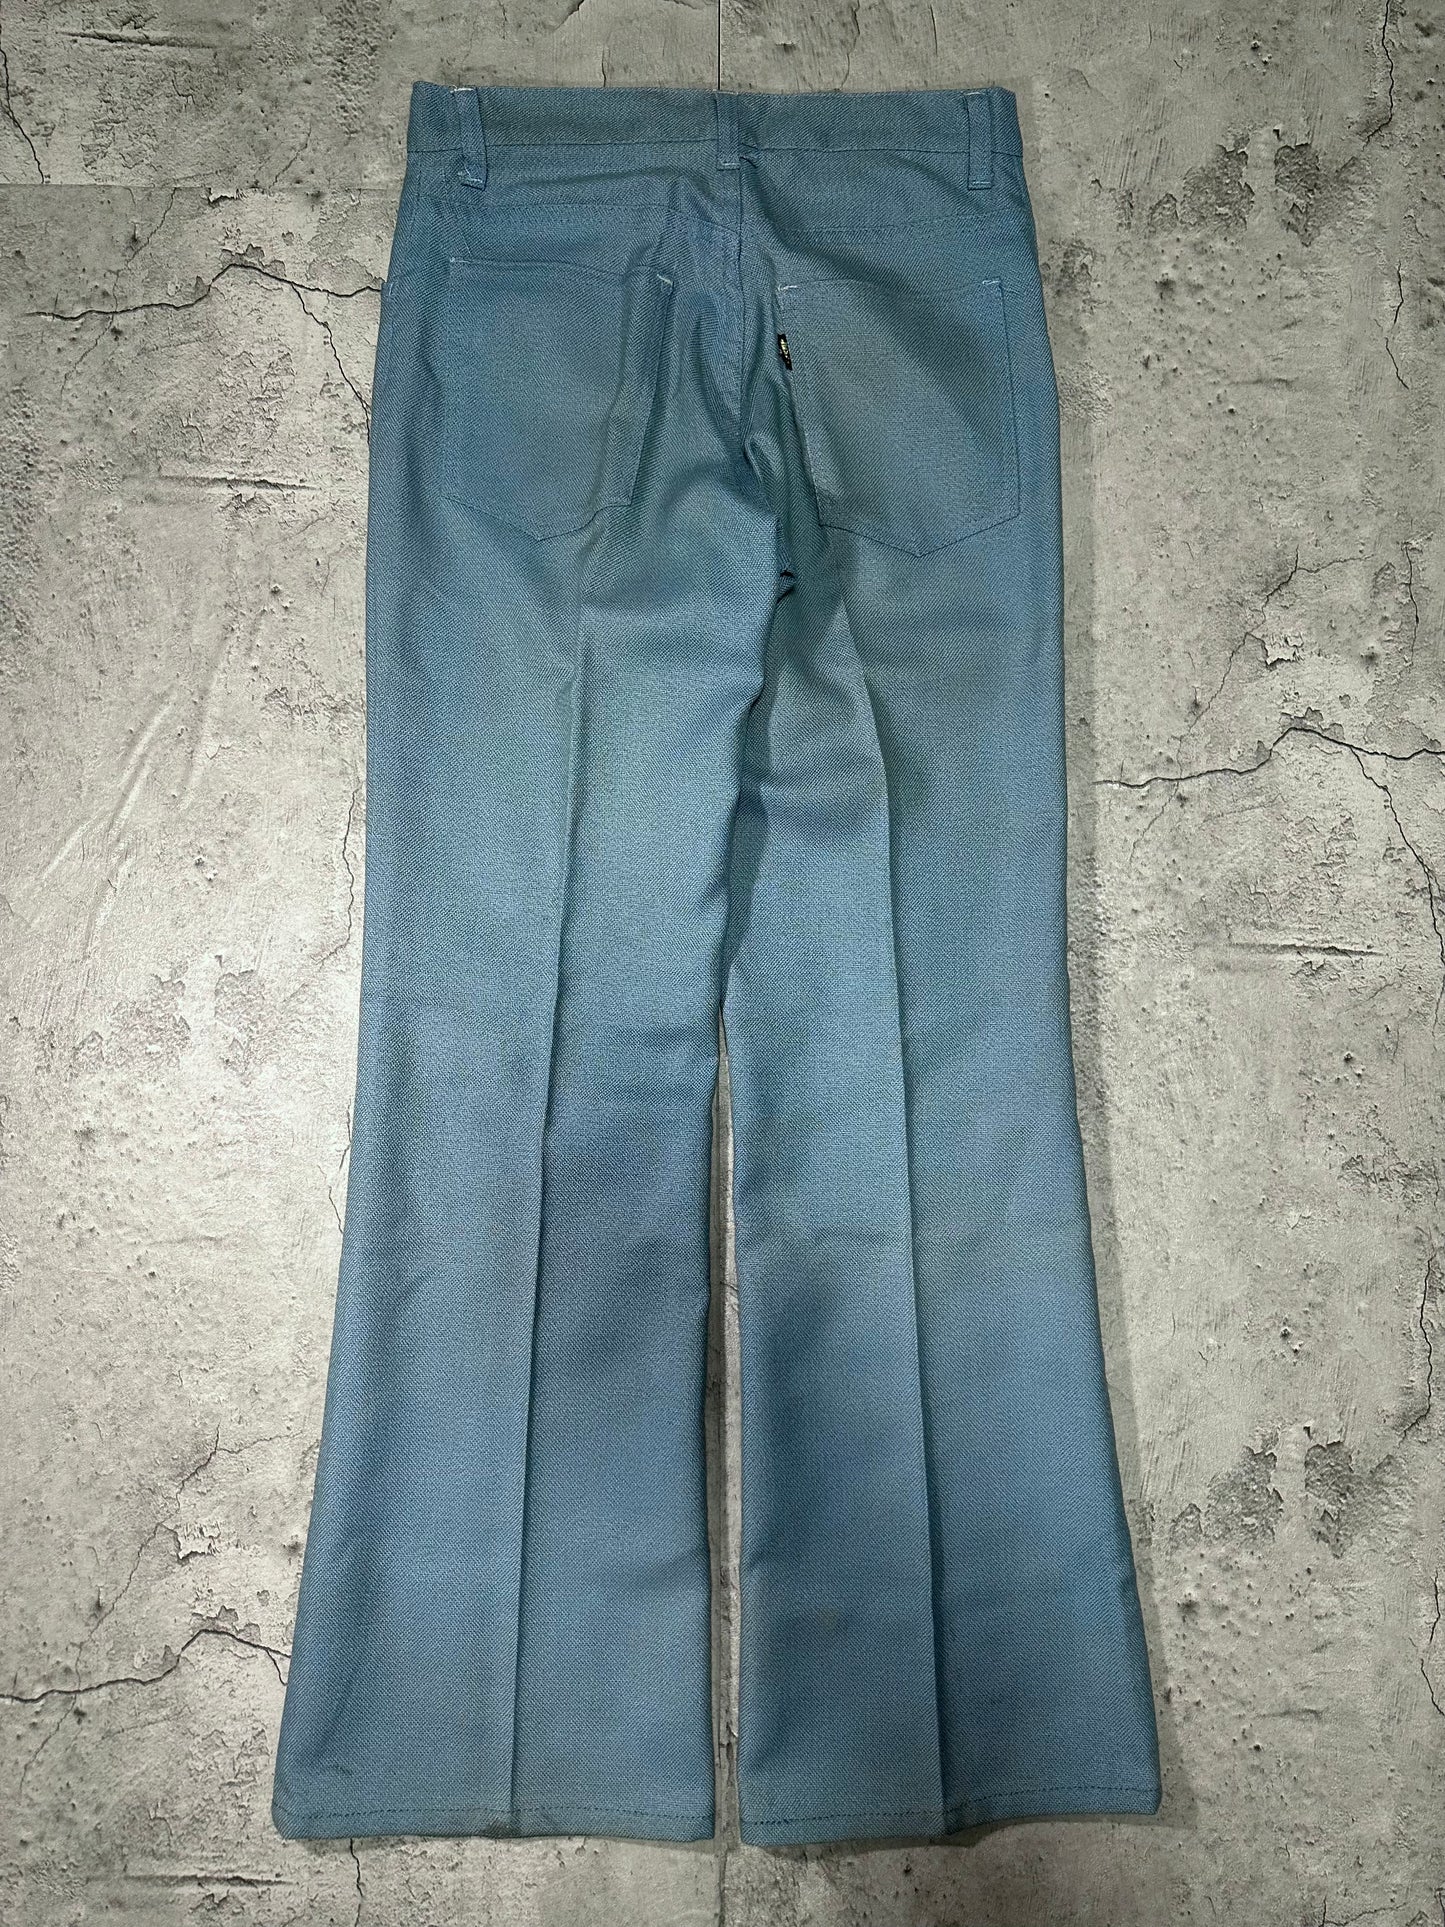 Levi's denim flared pants vintage 60~70s